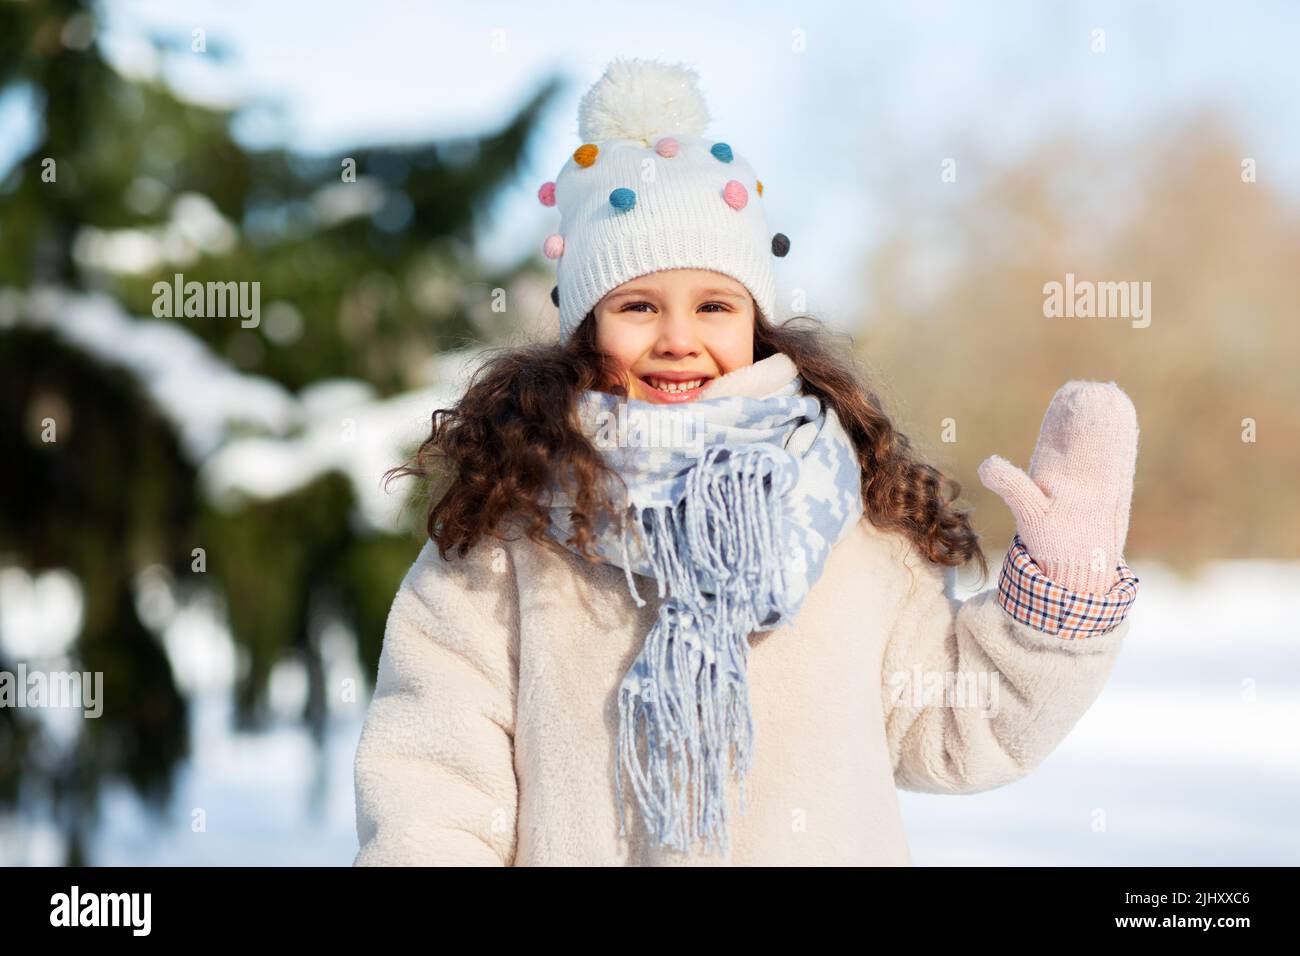 happy little girl waving hand outdoors in winter Stock Photo